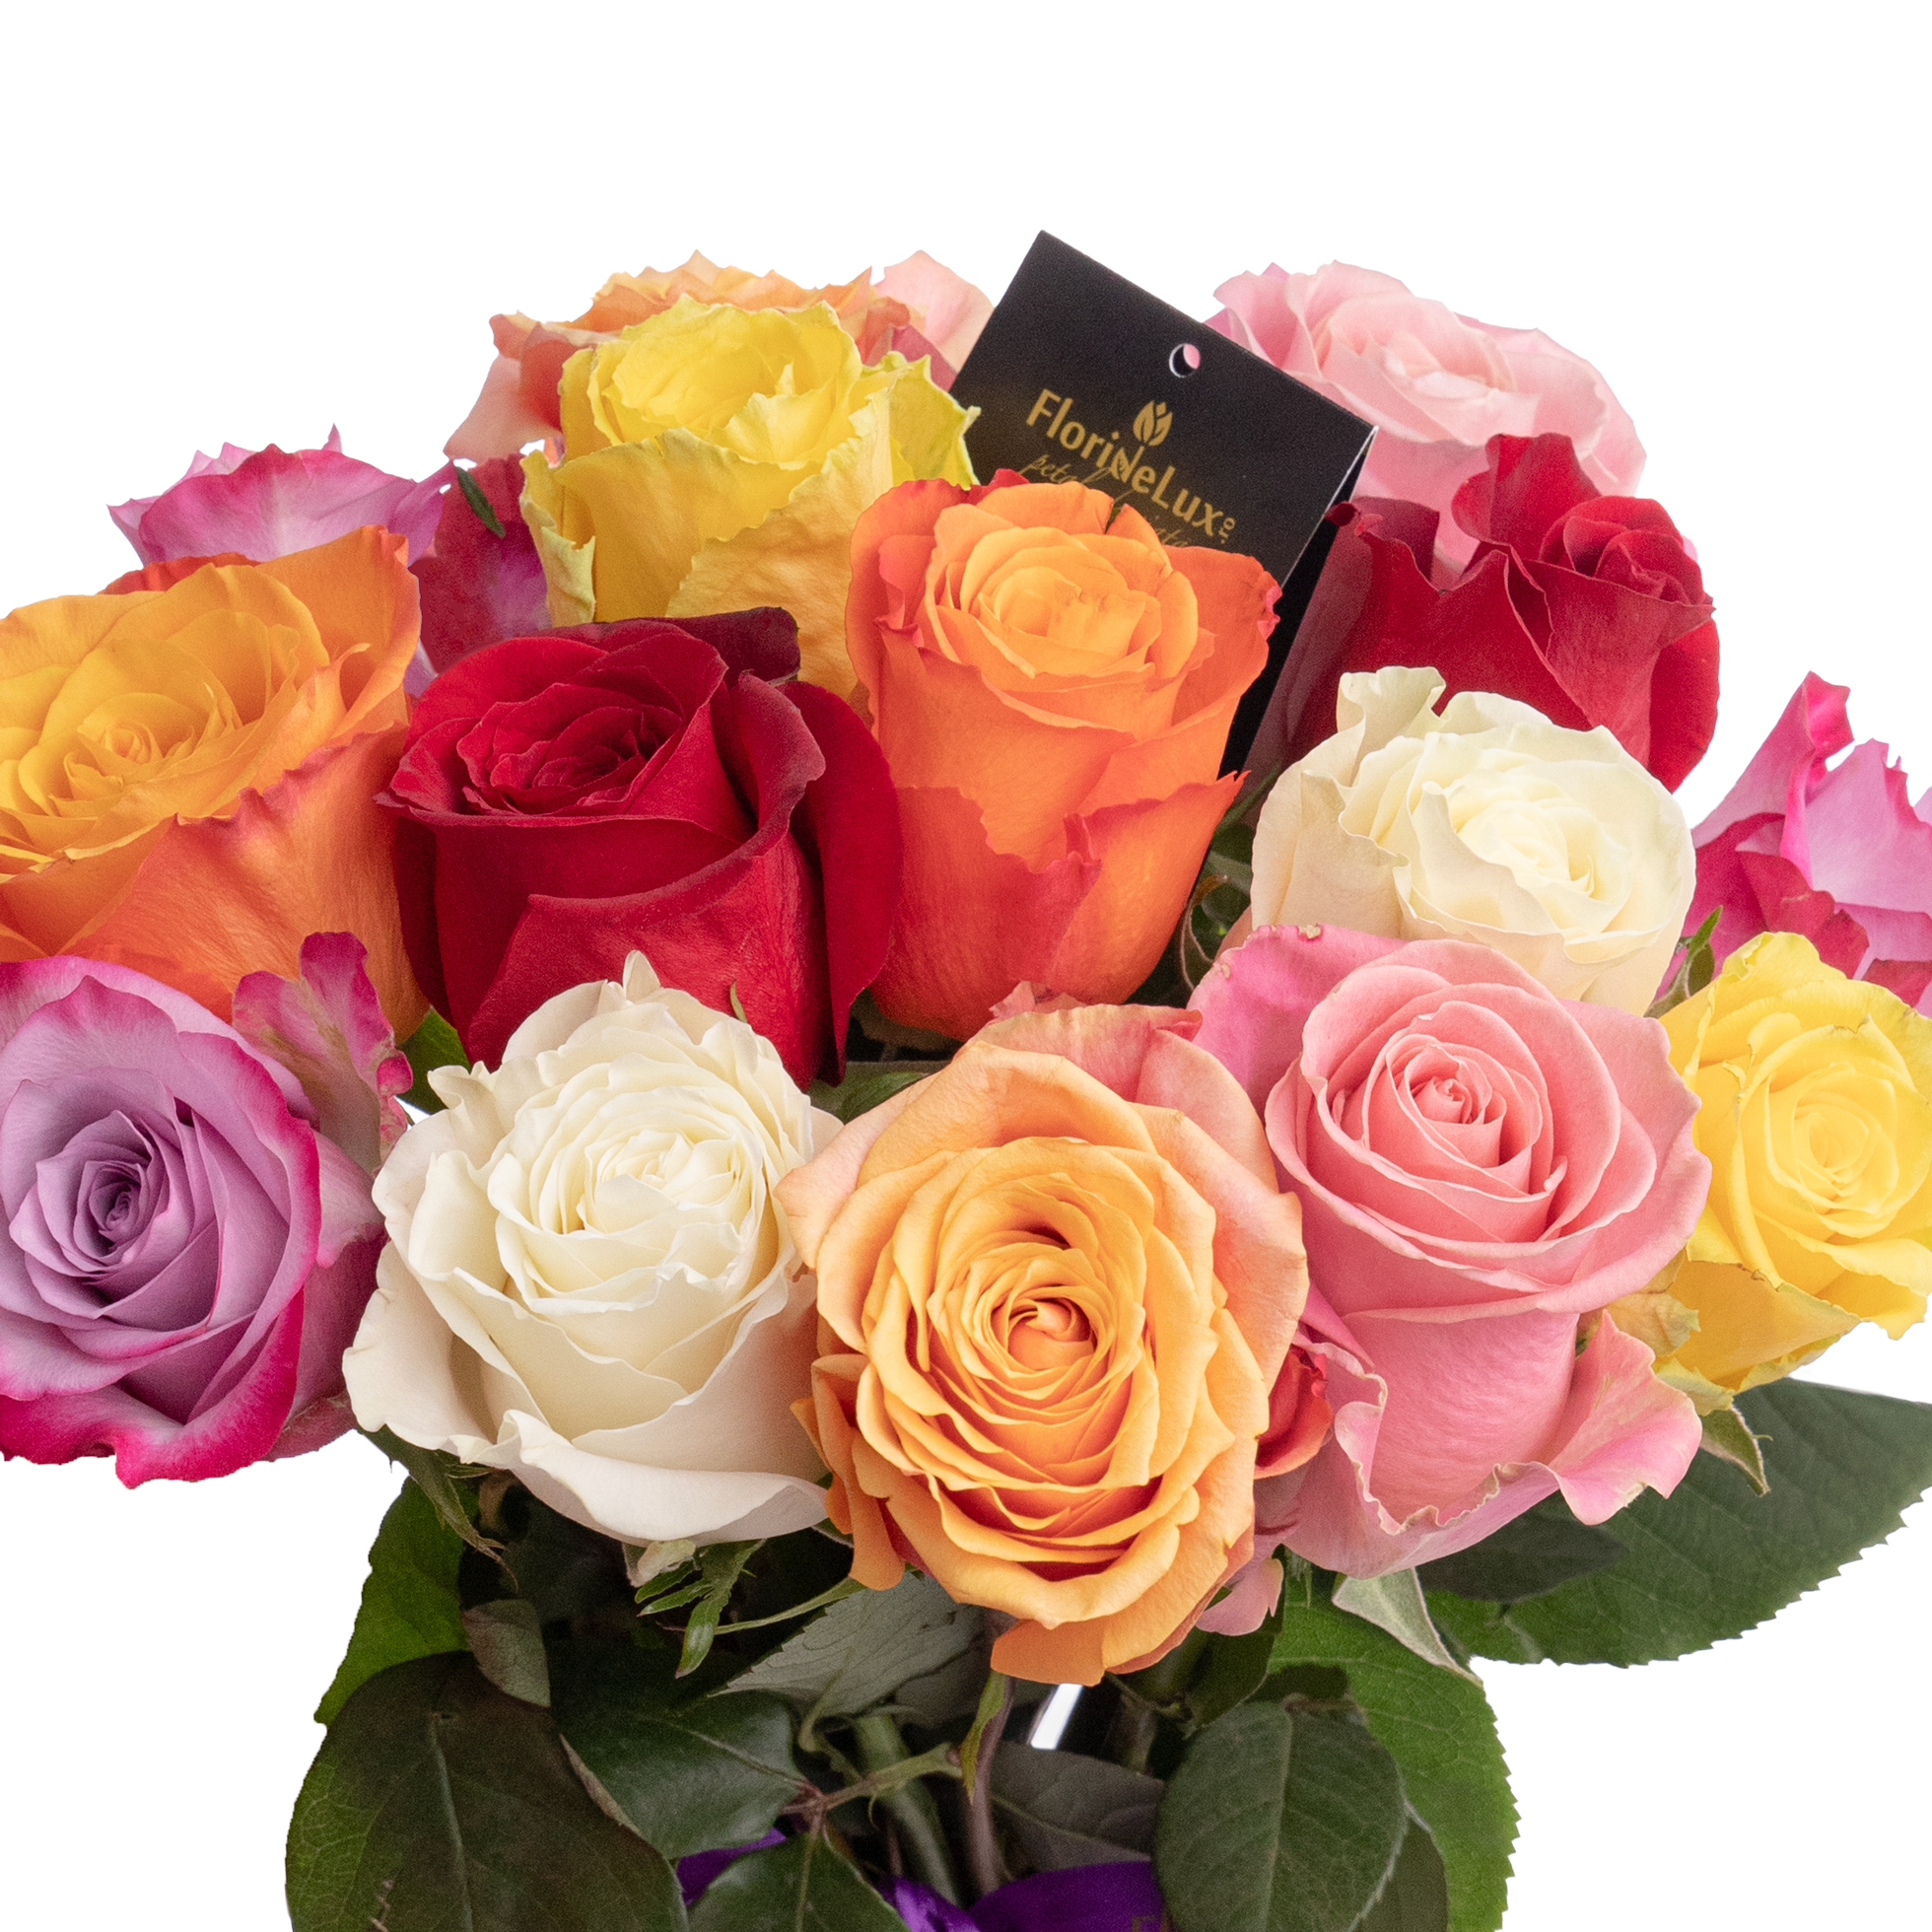 trandafiri multicolori, un buchet vesel, plin de culoare